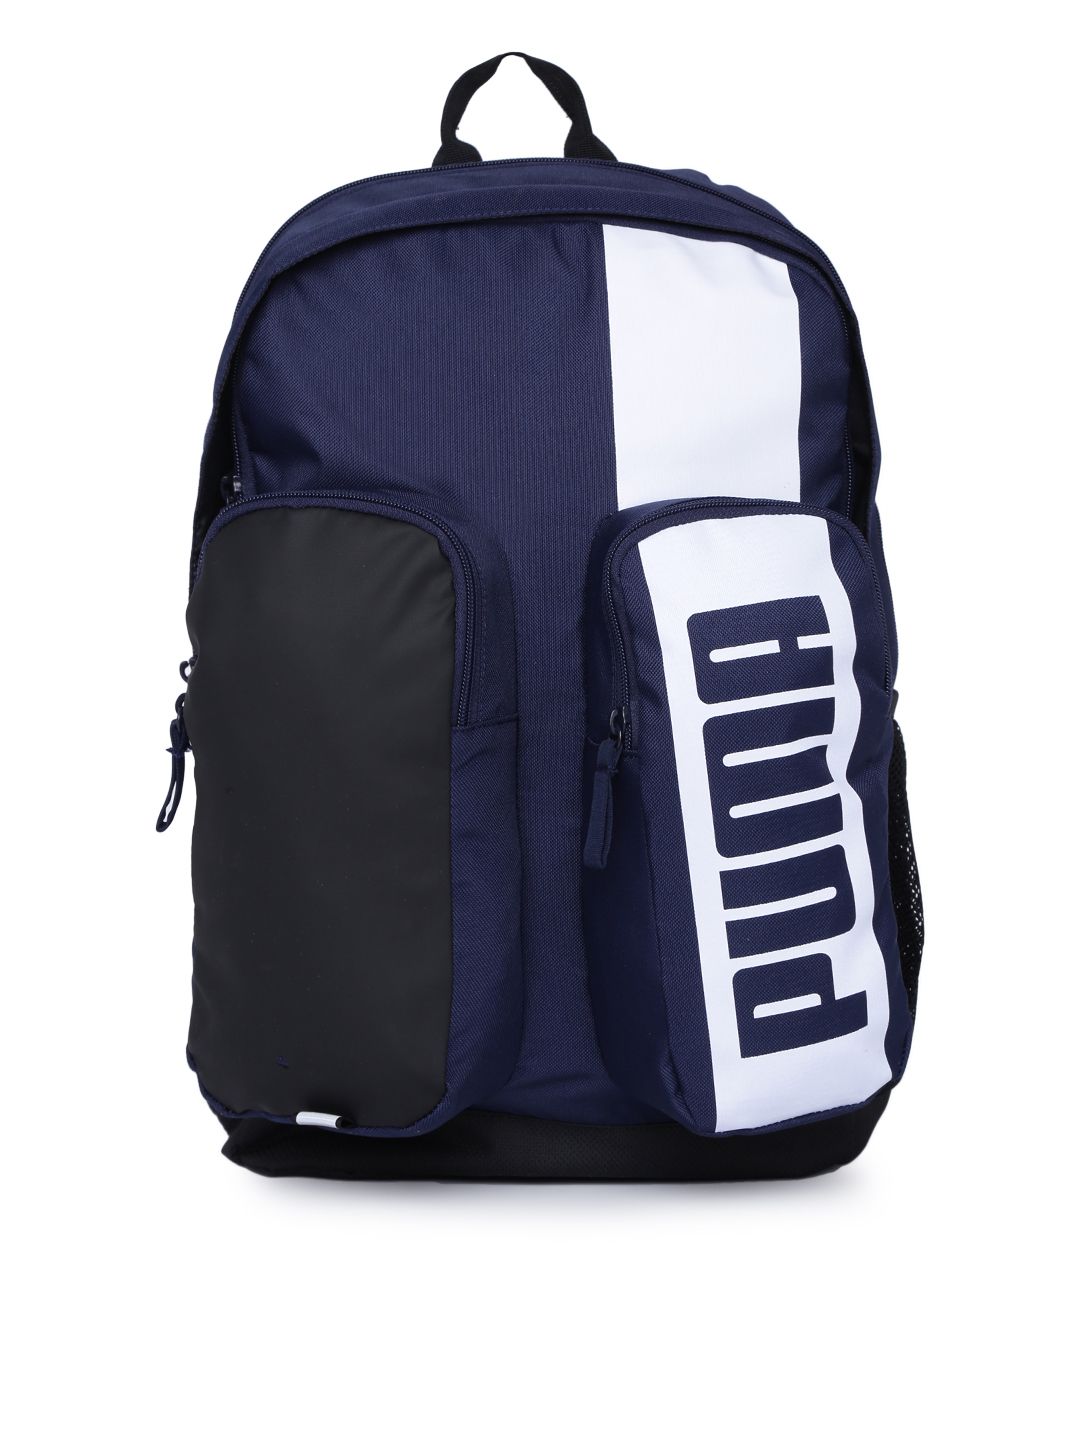 types of backpack brands